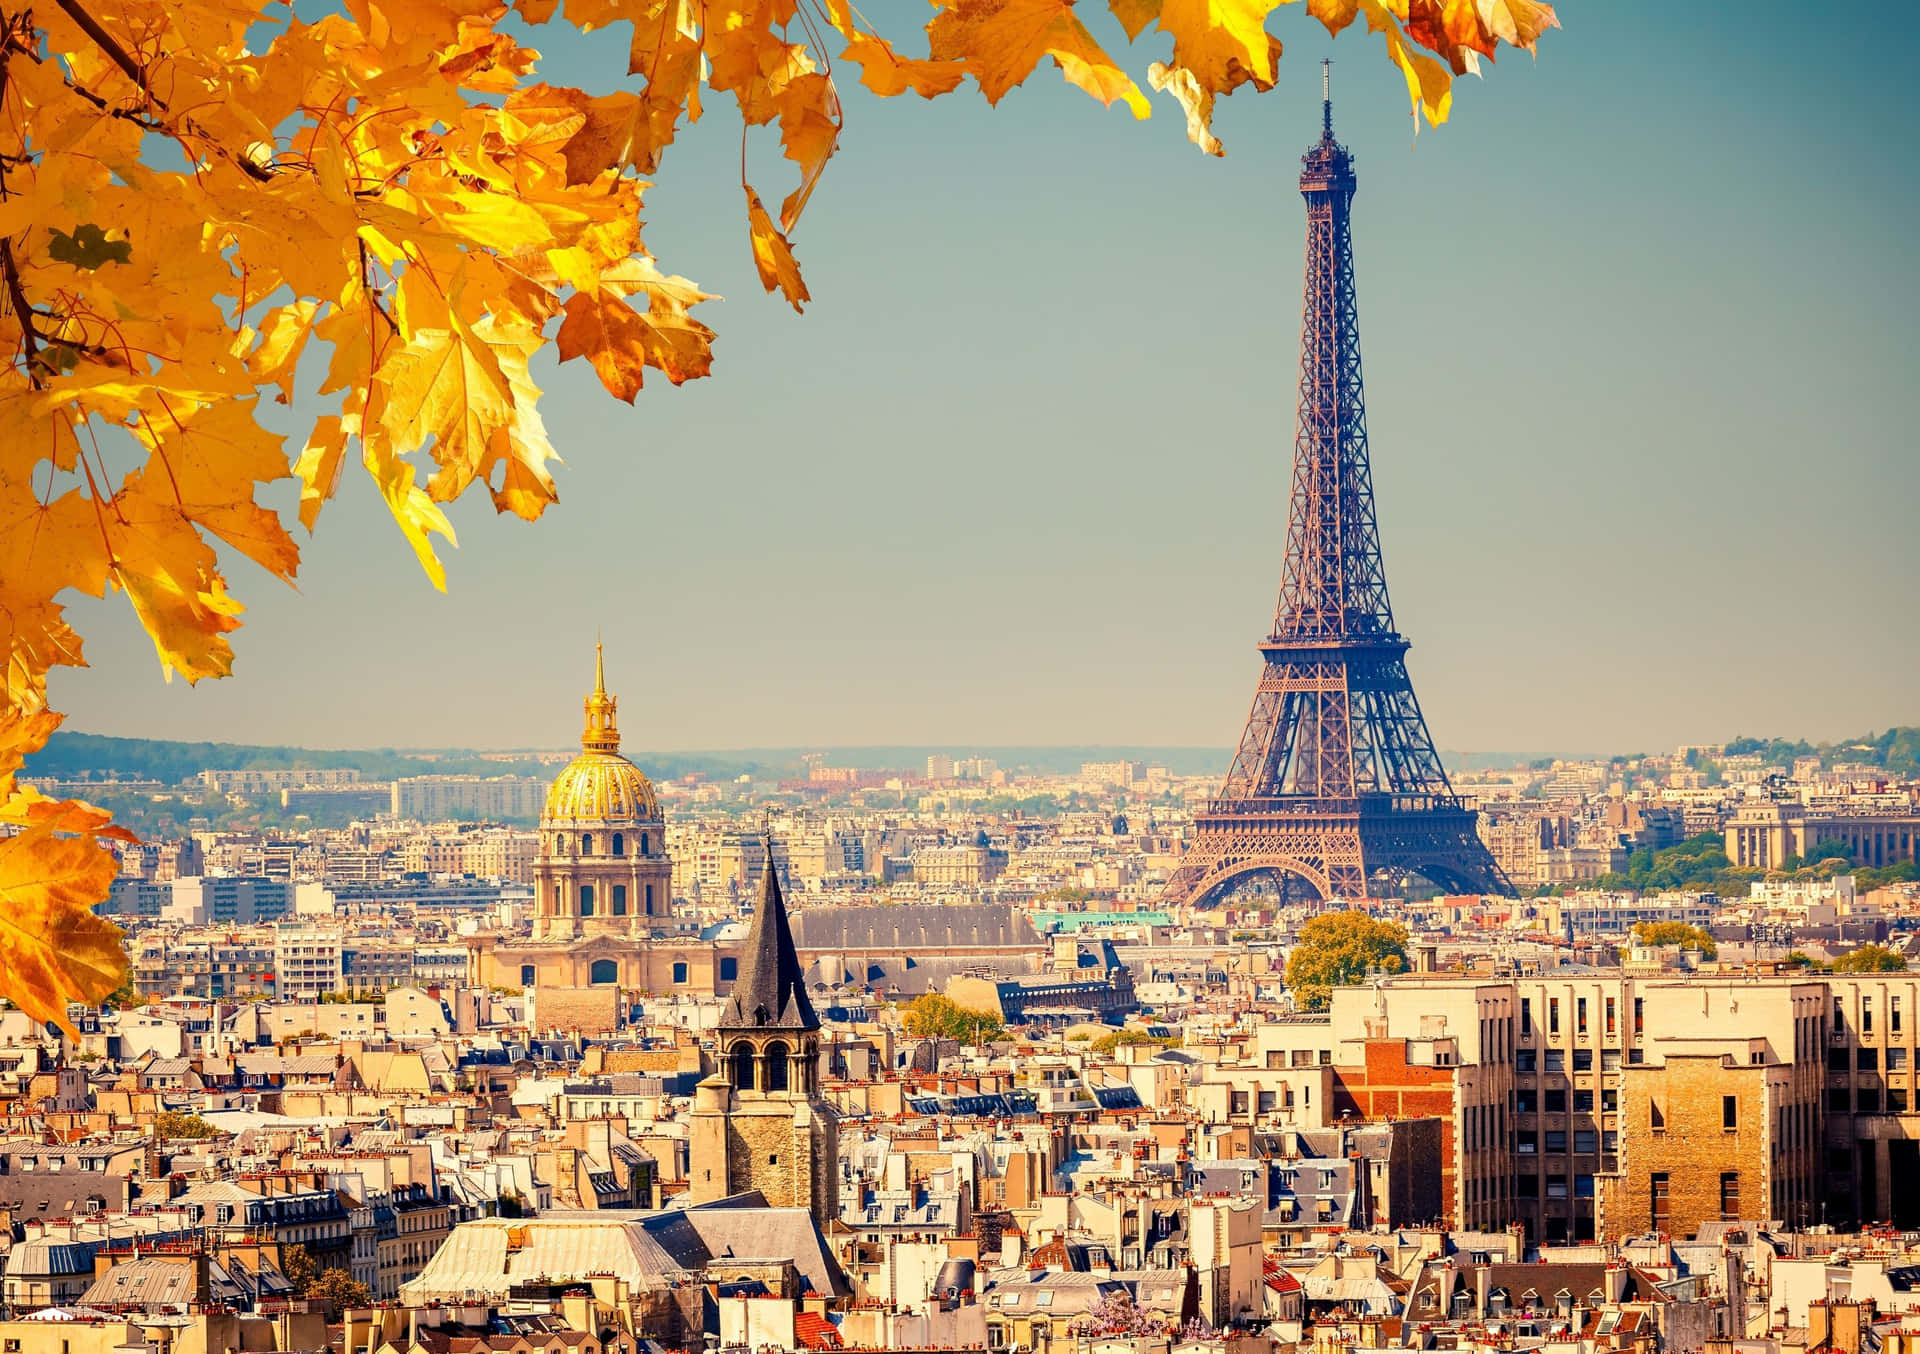 “Explore the Charm of Paris”